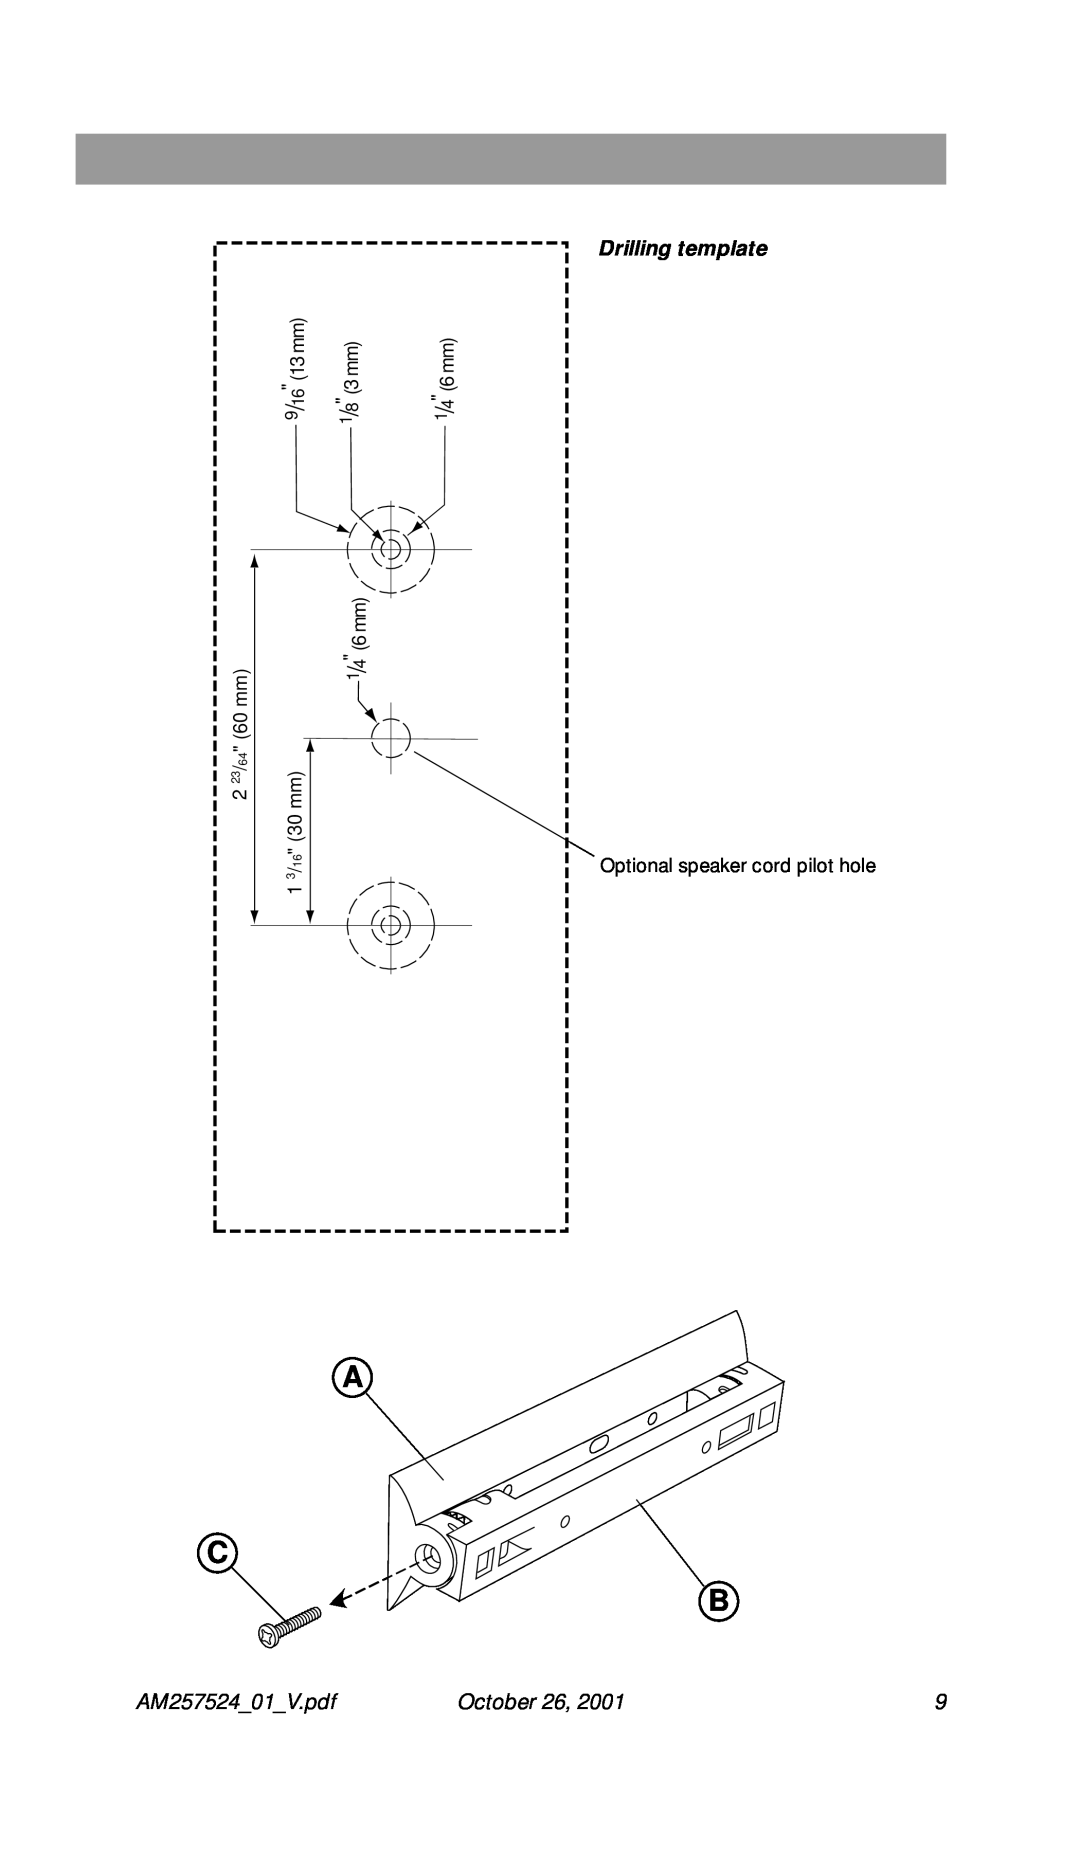 Bose Speakers manual A C B, Drilling template, October, 1 /4, 9/16, mm13, 6064, 30/16 